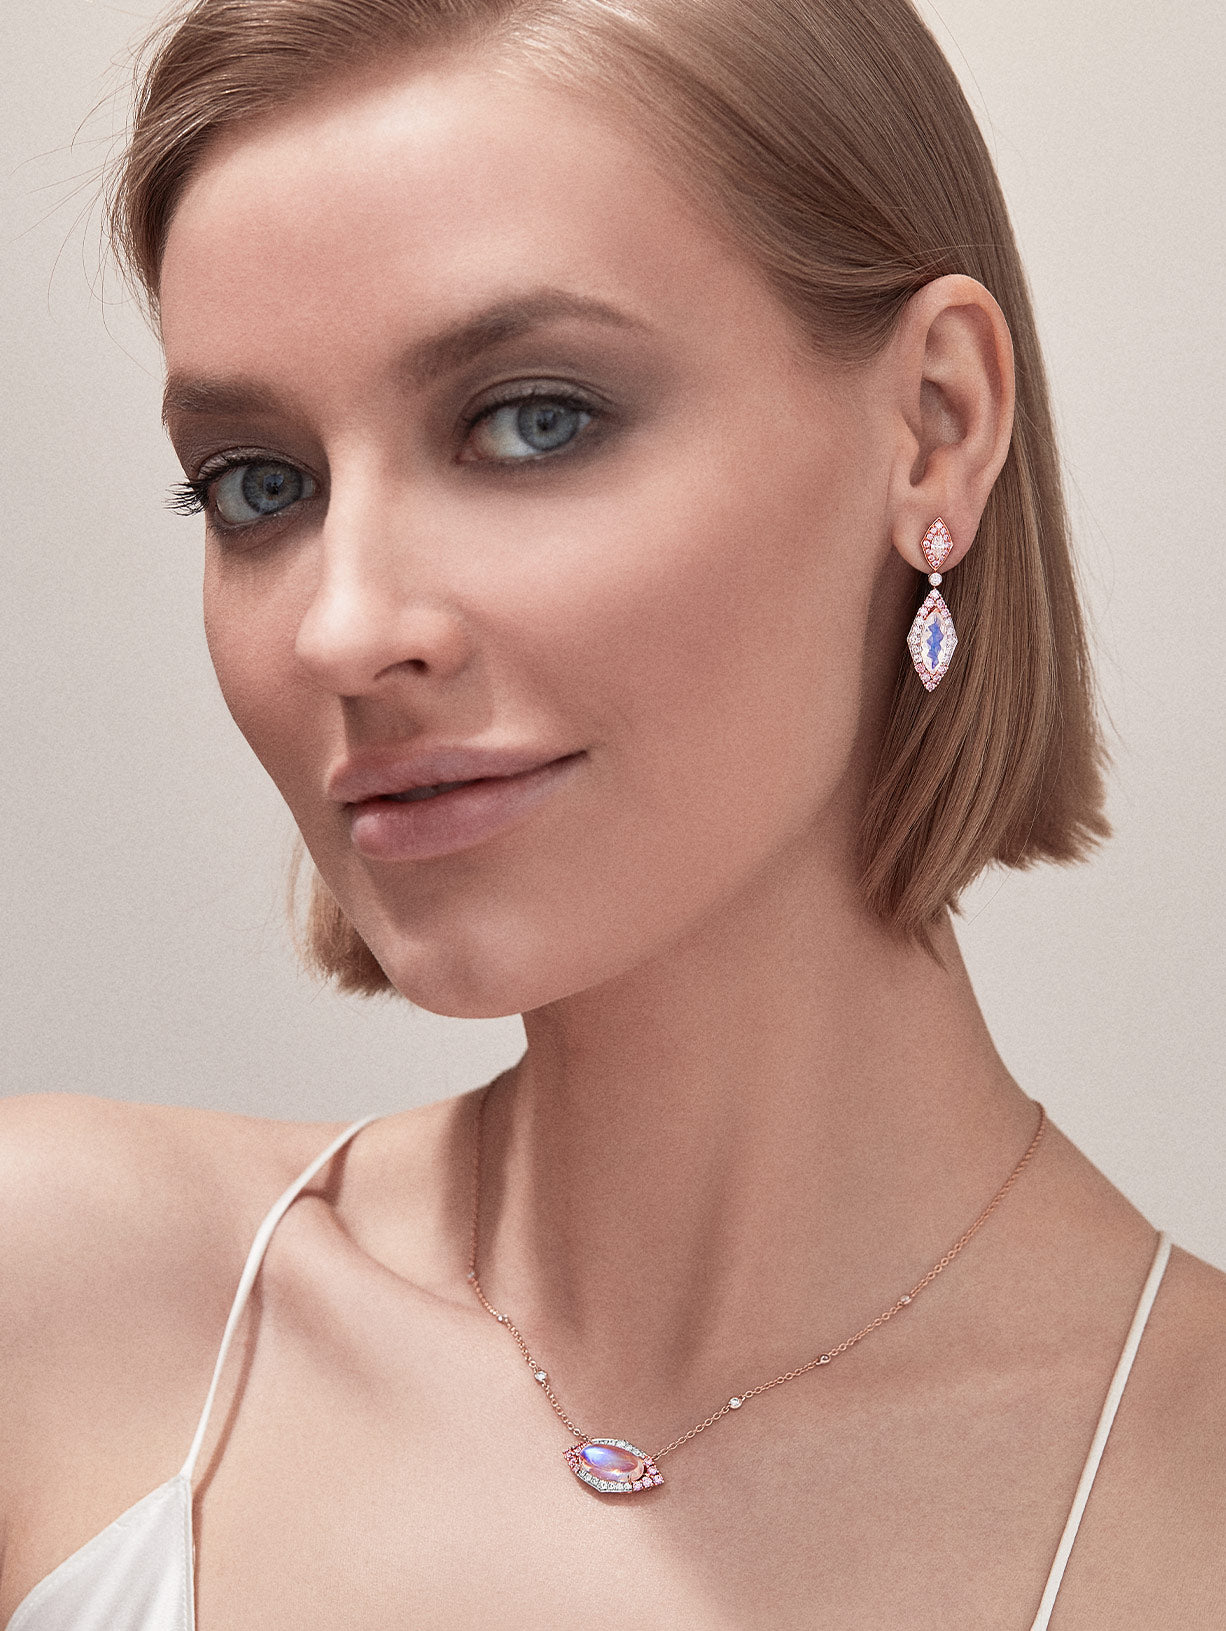 Argyle Pink™ Diamond and Moonstone Earrings - Pink Diamonds, J FINE - J Fine, Earrings - Pink Diamond Jewelry, argyle-pink™-diamond-and-moonstone-earrings-by-j-fine - Argyle Pink Diamonds